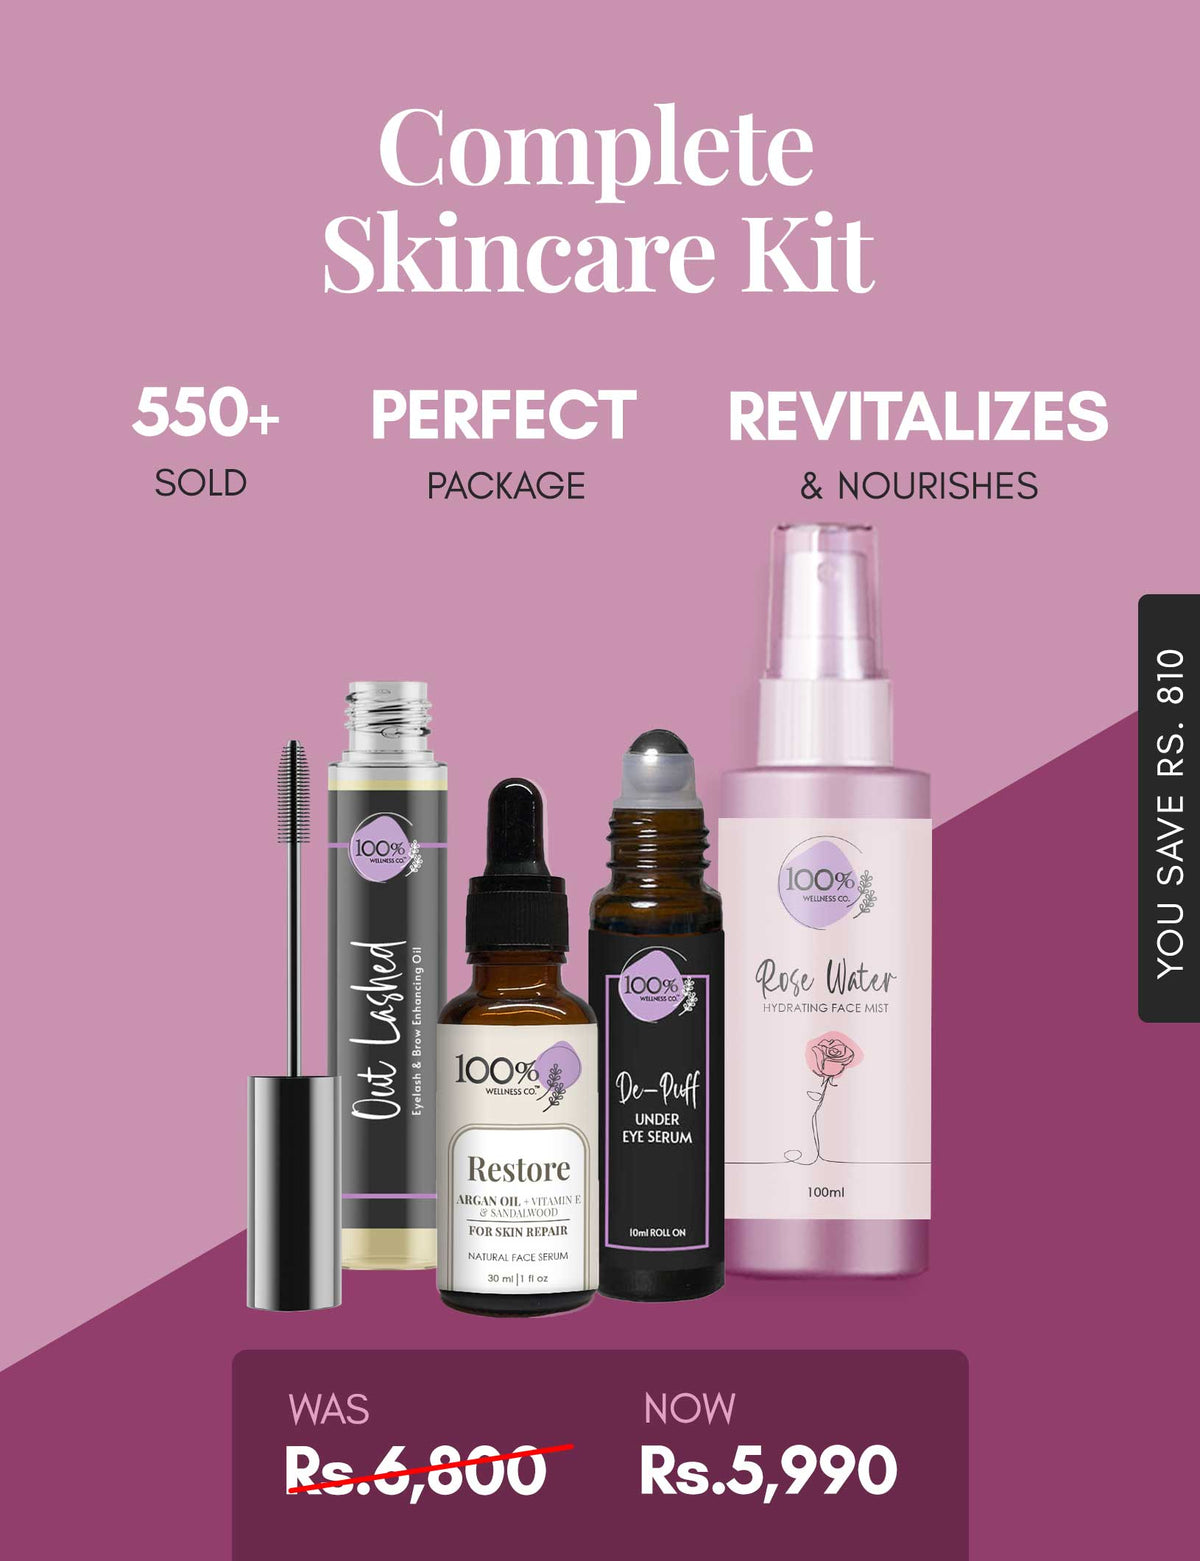 Complete Skin-care Kit